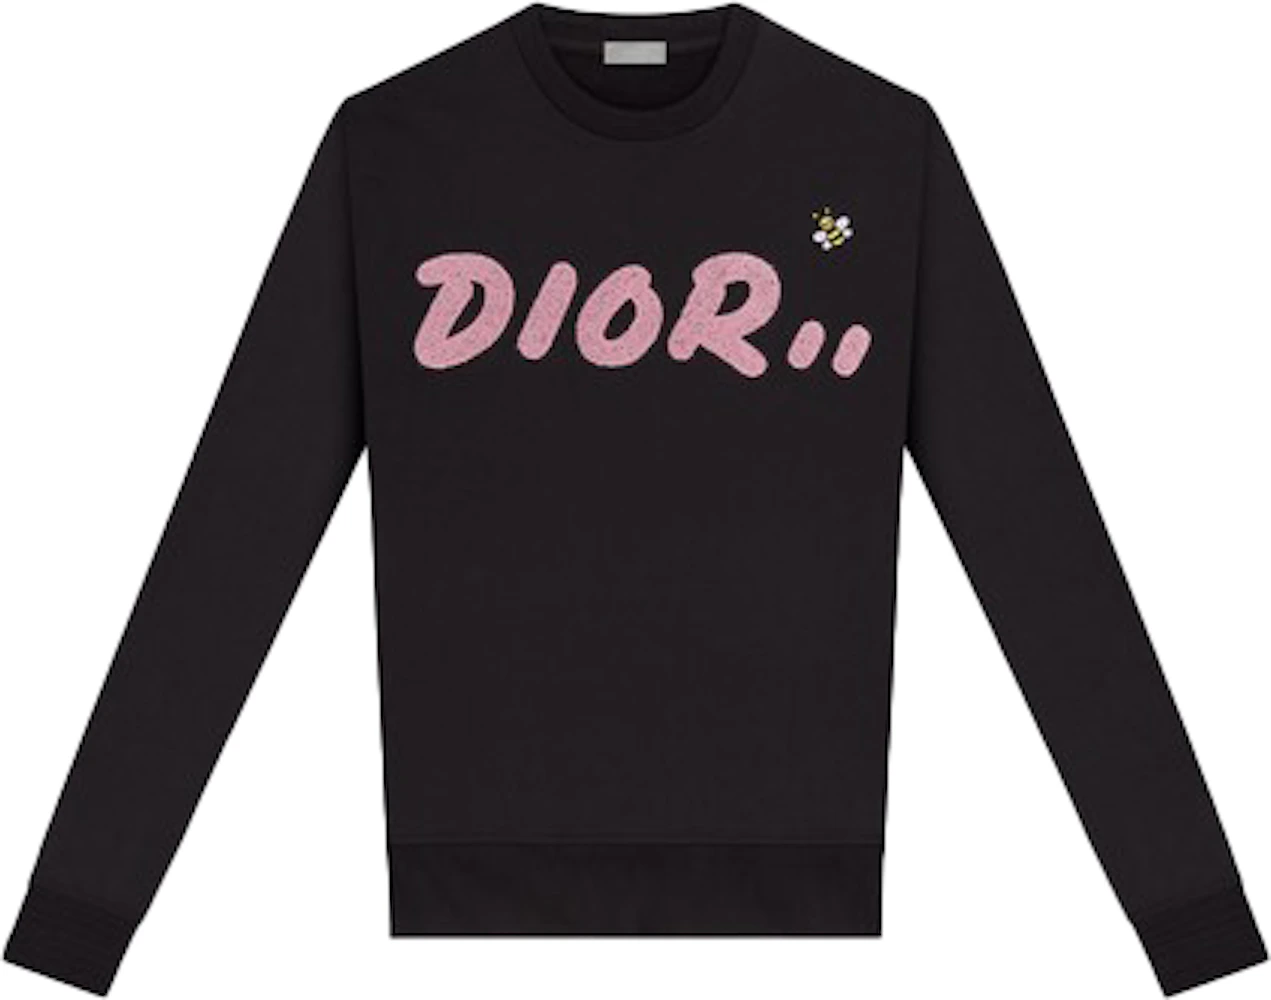 KAWS x Dior Crewneck Sweatshirt Black Men's - SS19 - US